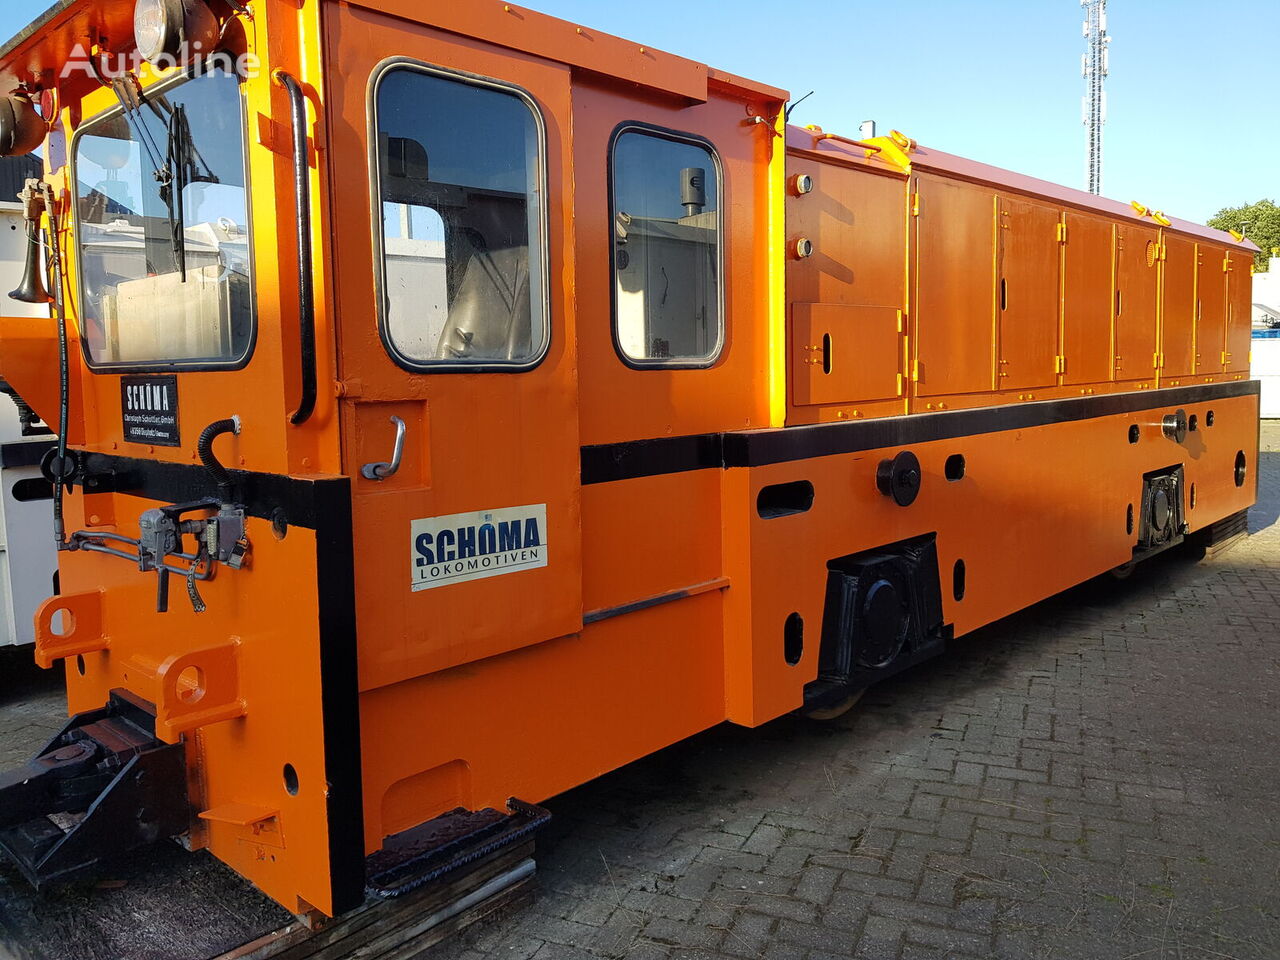 Deutz Schoema CFL 200 DCL 40 ton    locomotive